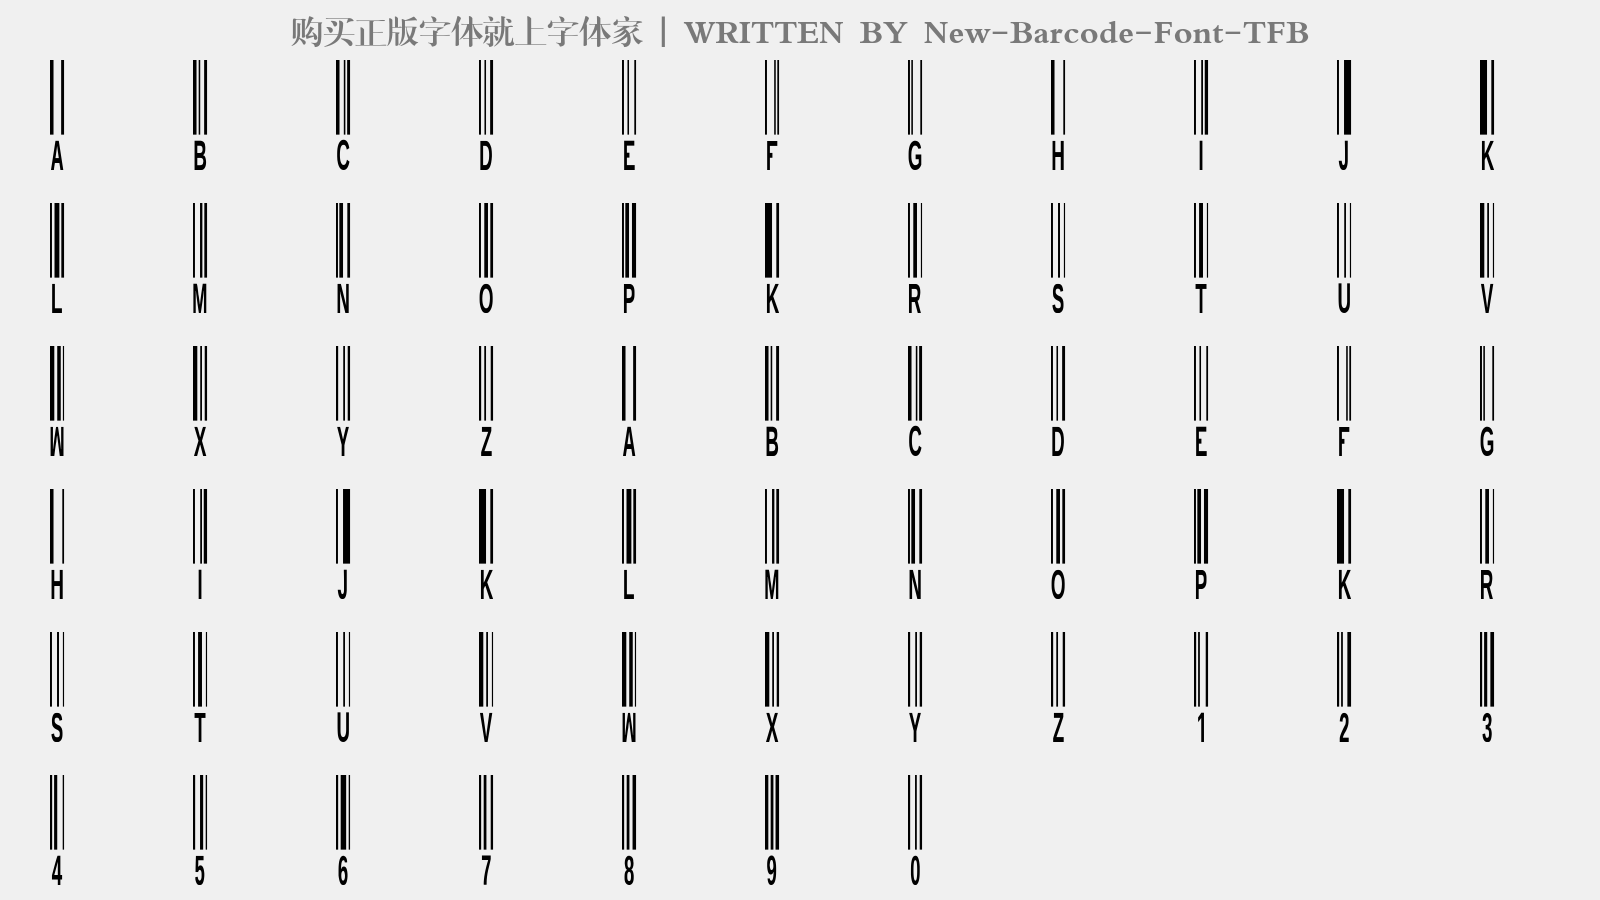 New-Barcode-Font-TFB - 大写字母/小写字母/数字